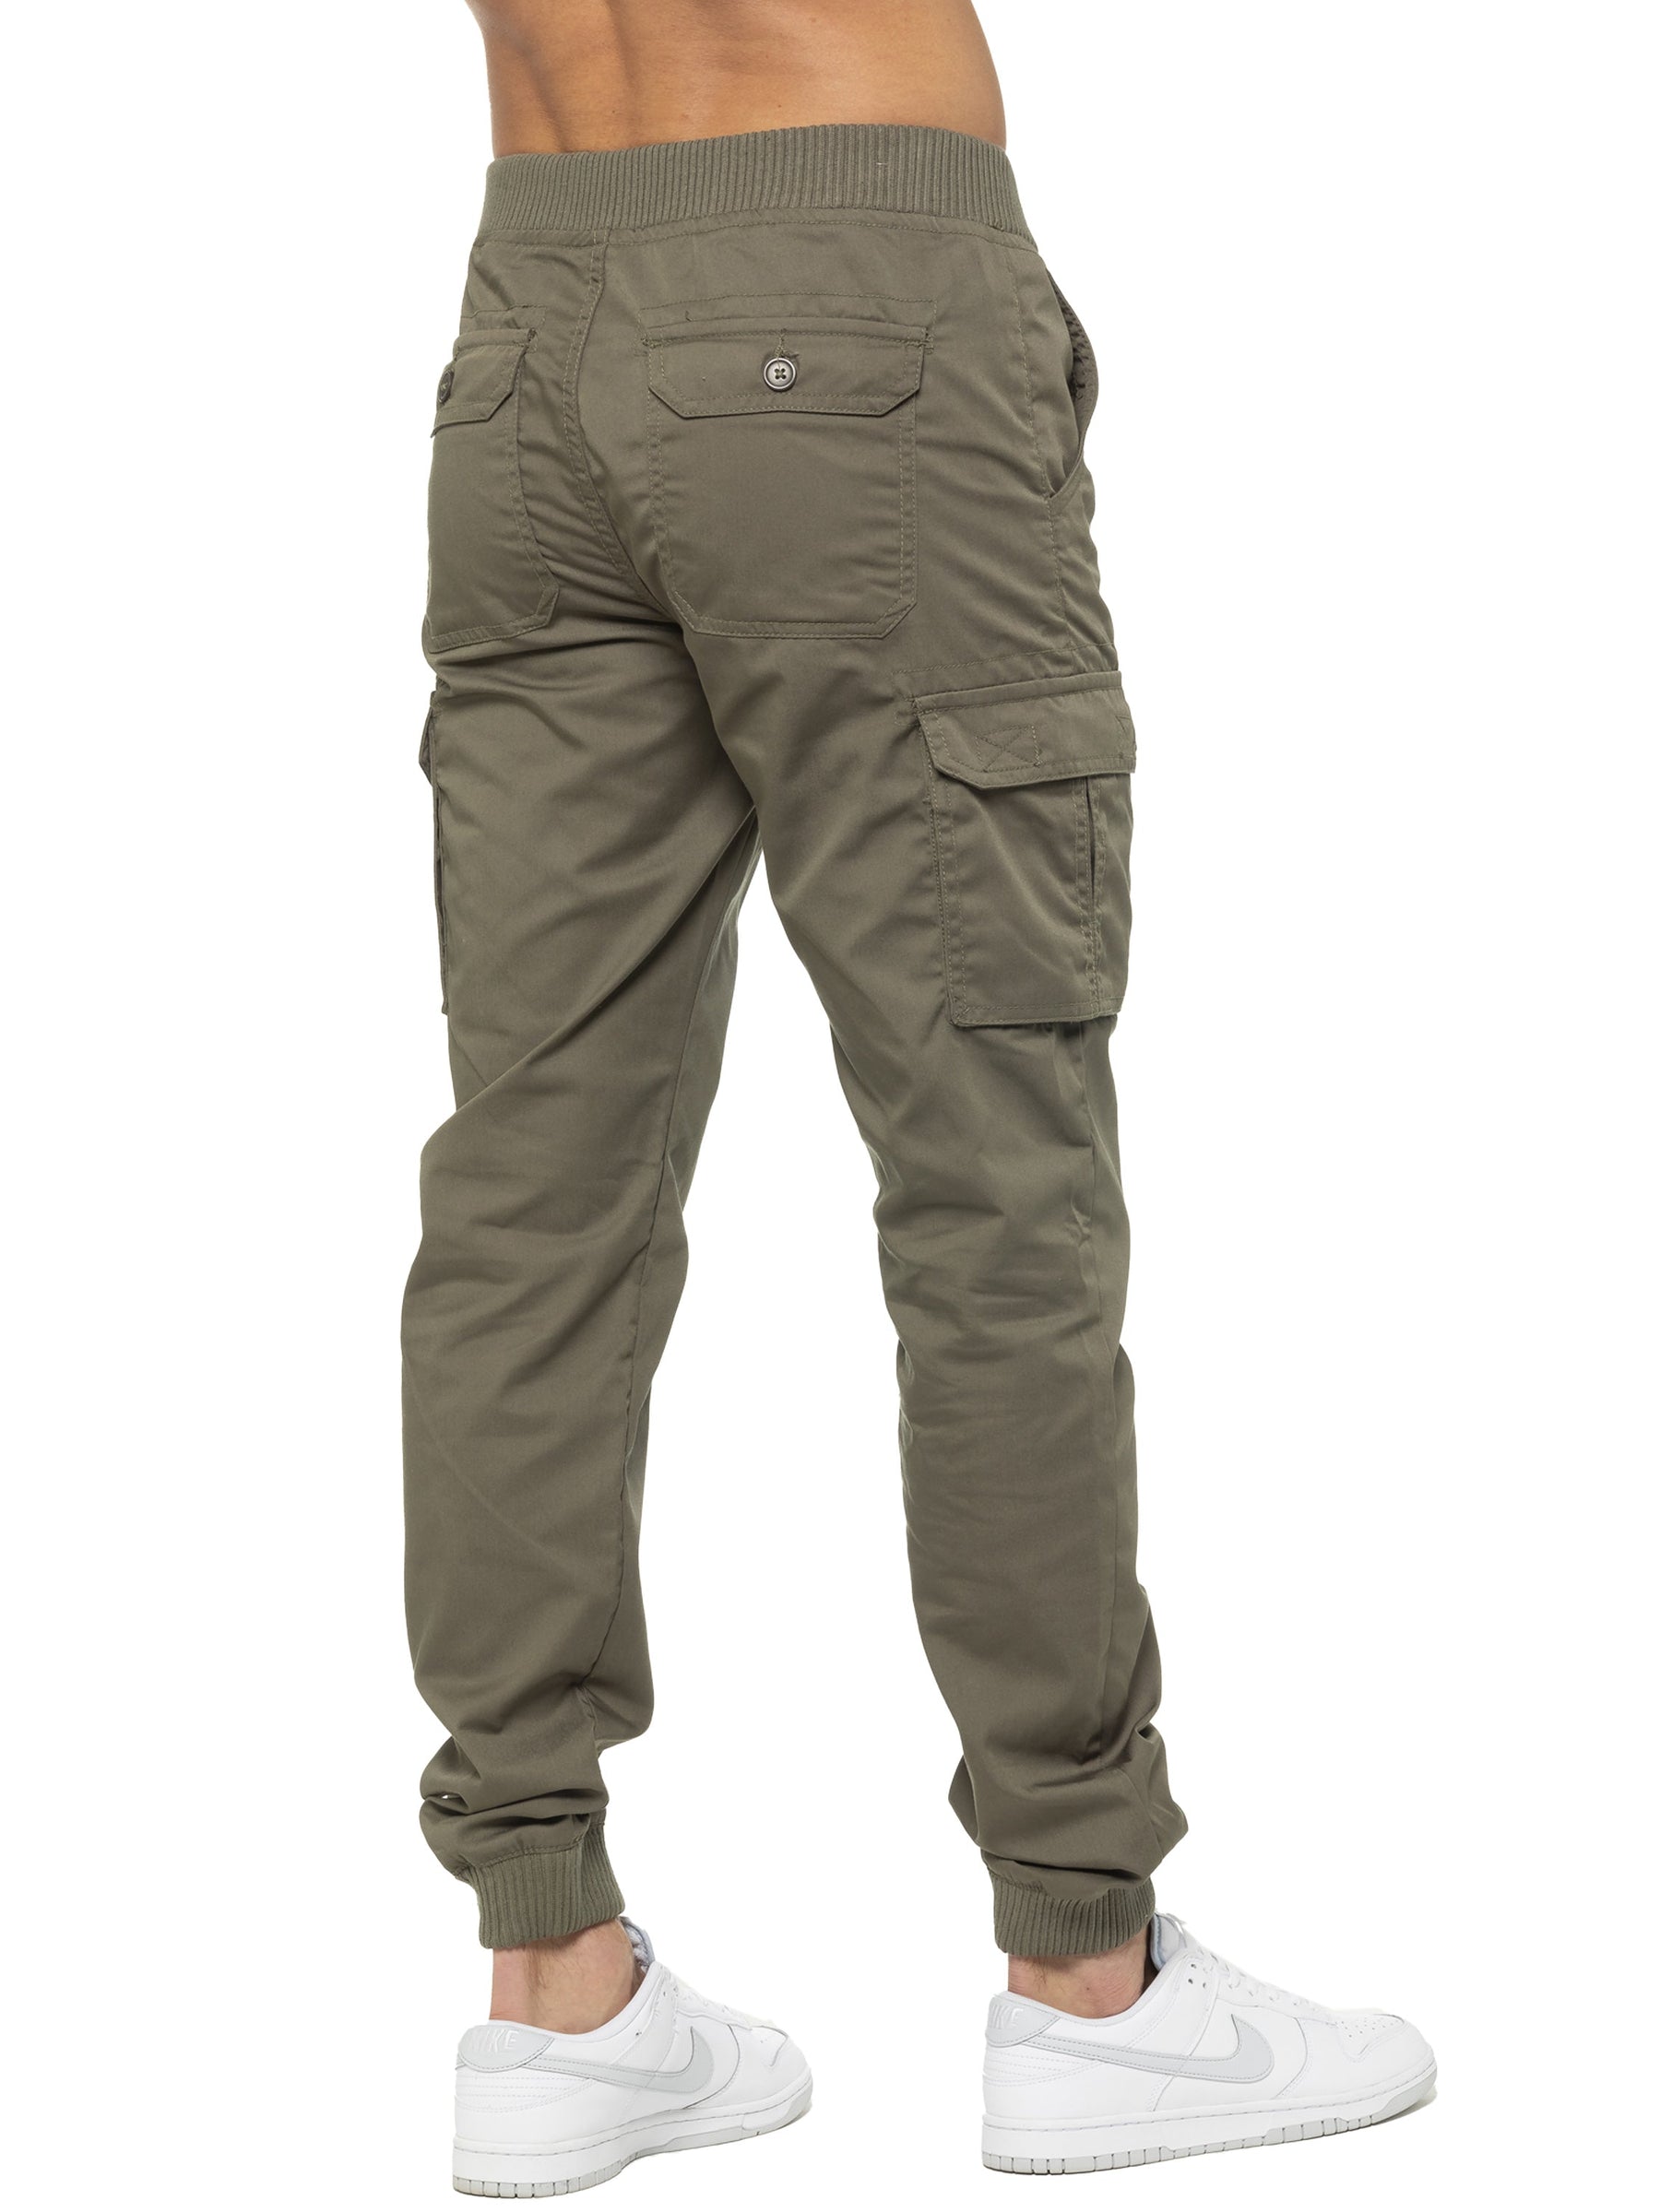 EZ409 Copy of ENZO Mens Military Combat Cuffed Camouflage Jeans ENZO RAWDENIM